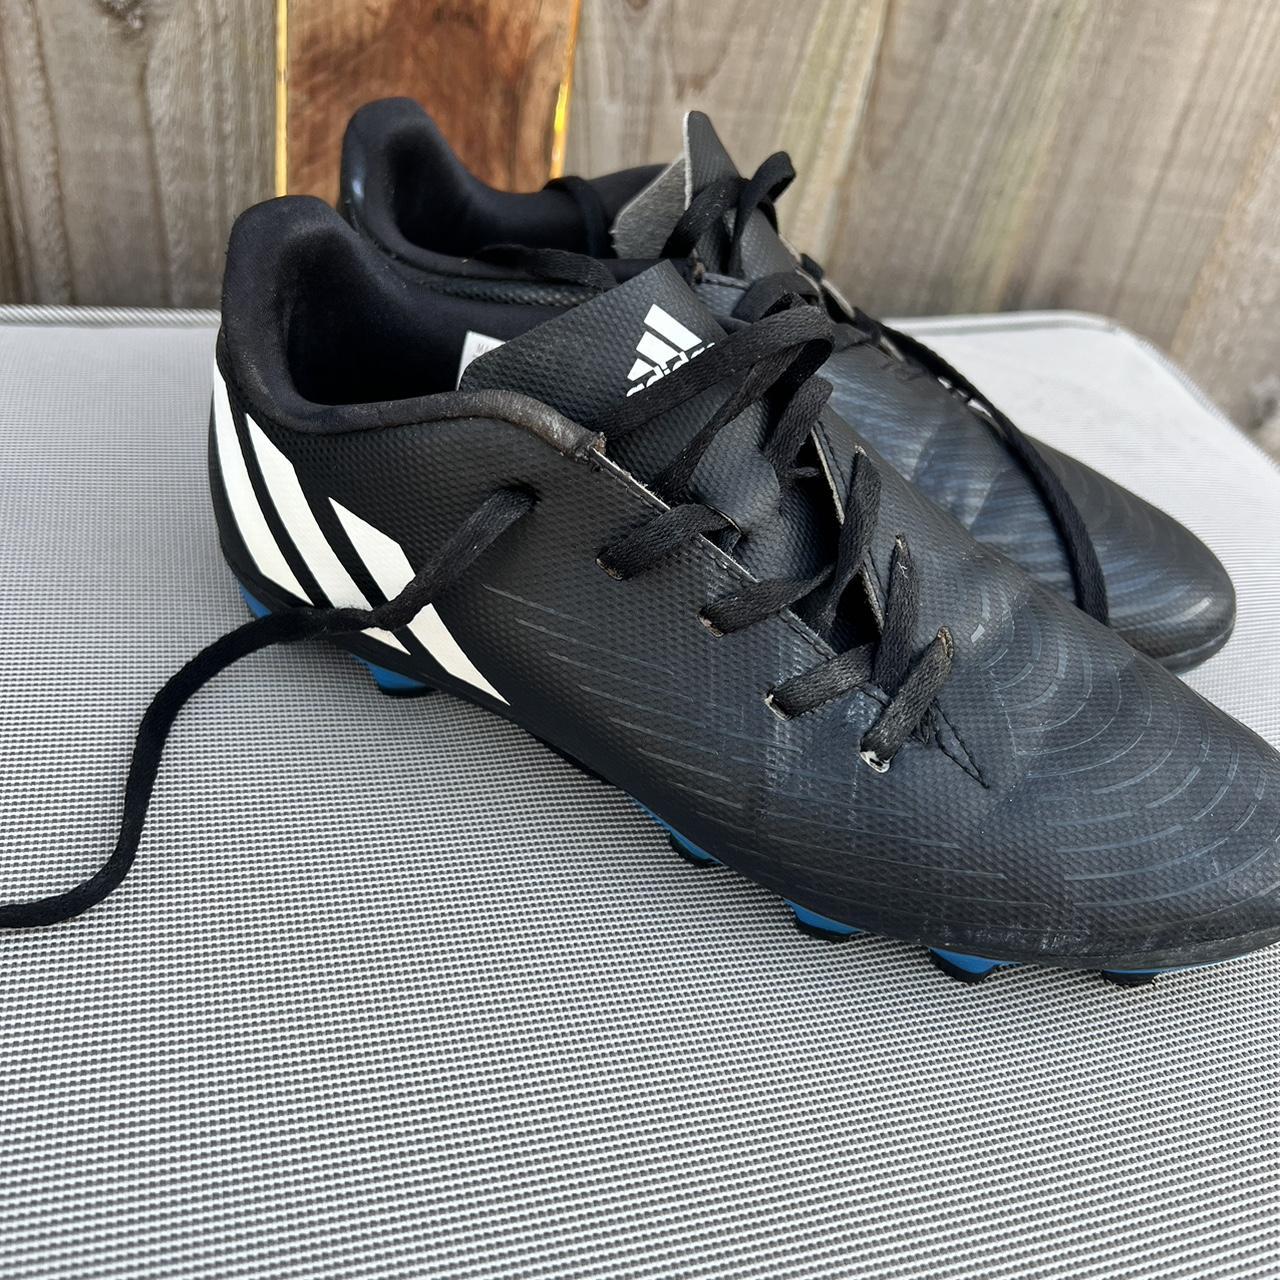 Adidas Predator UK 5 football boots - Depop